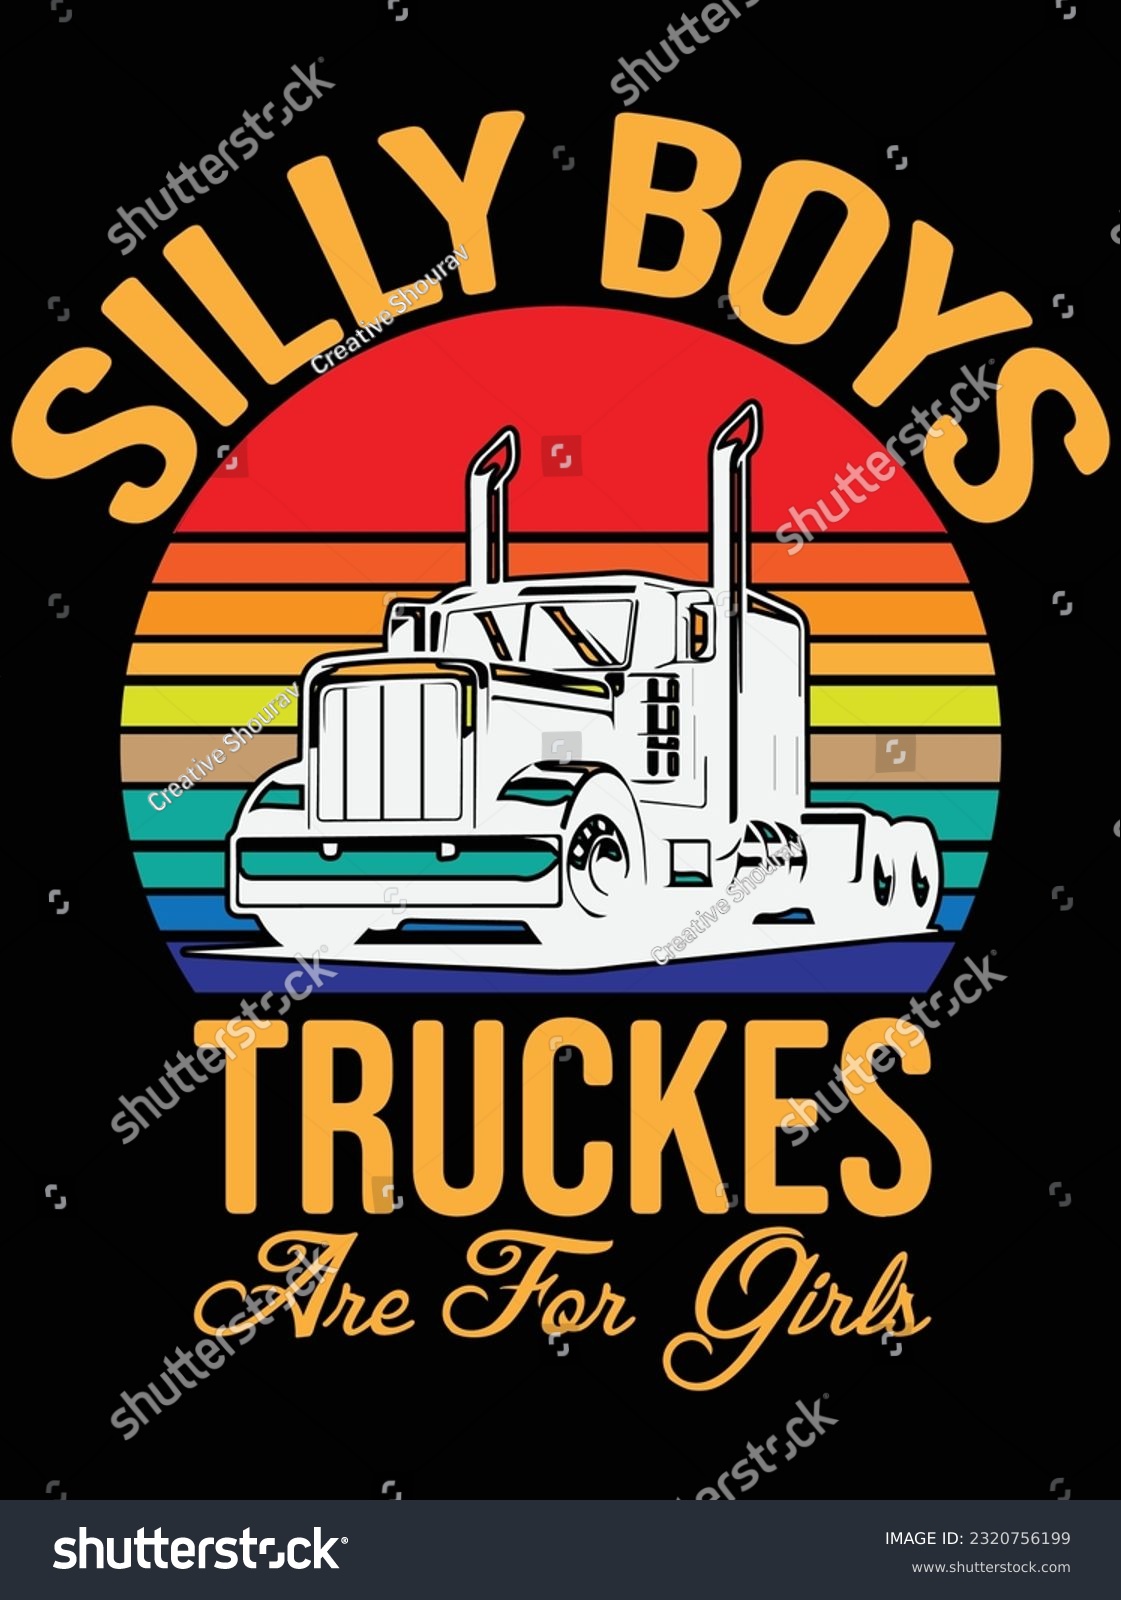 SVG of Silly boys trucks are girls design vector art design, eps file. design file for t-shirt. SVG, EPS cuttable design file svg